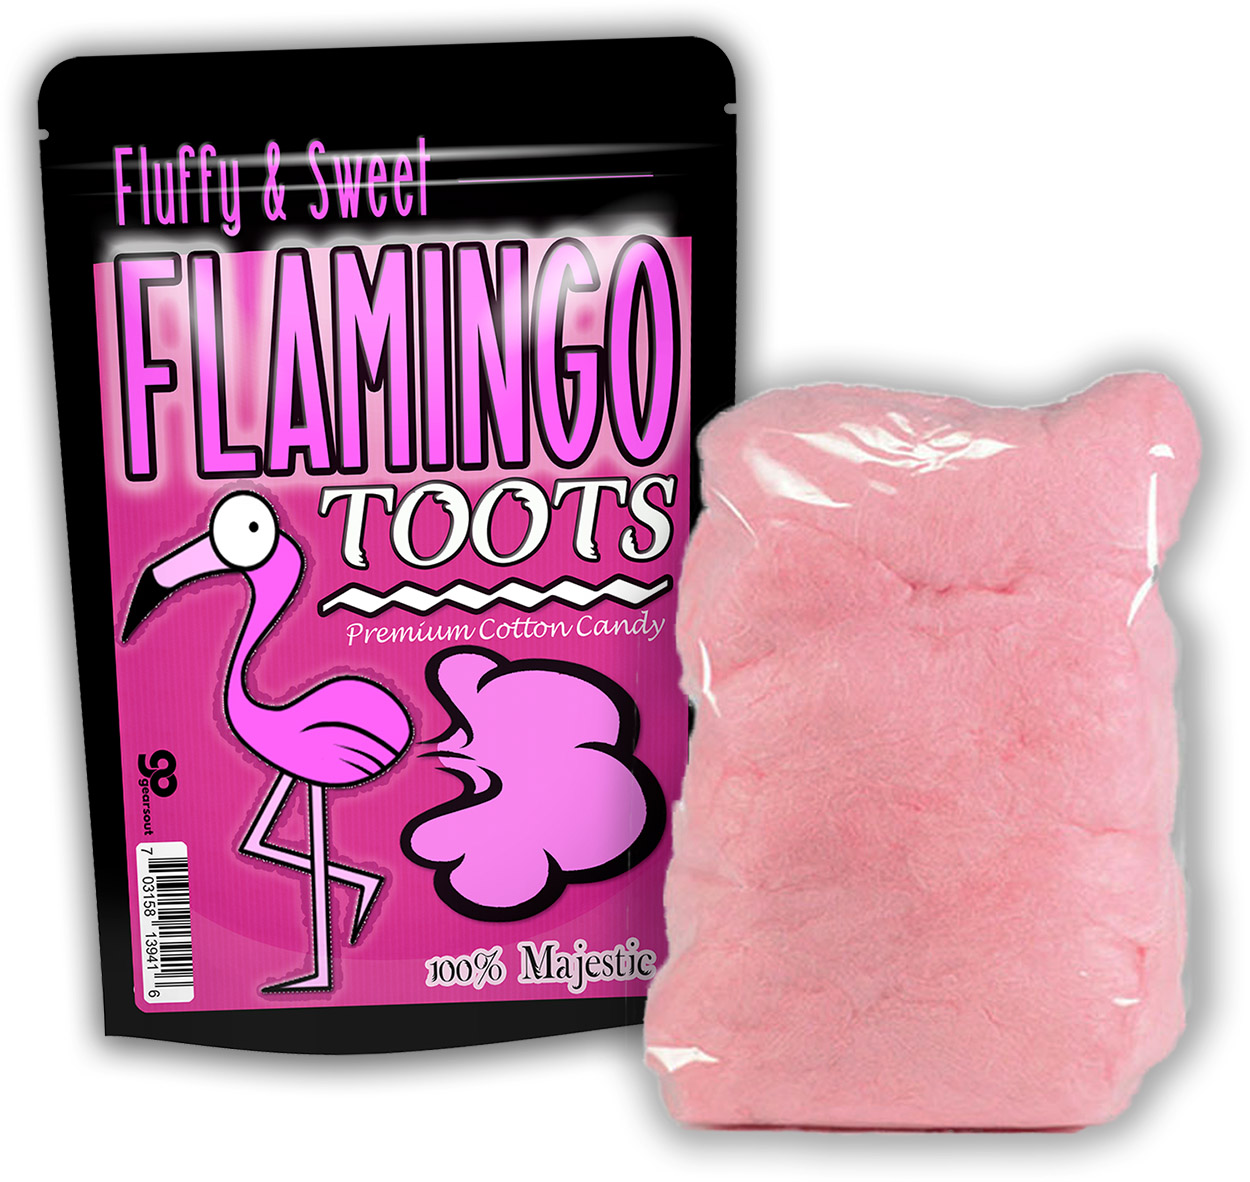 https://www.funslurp.com/images/Flamingo-Toots-Cotton-Candy.jpg